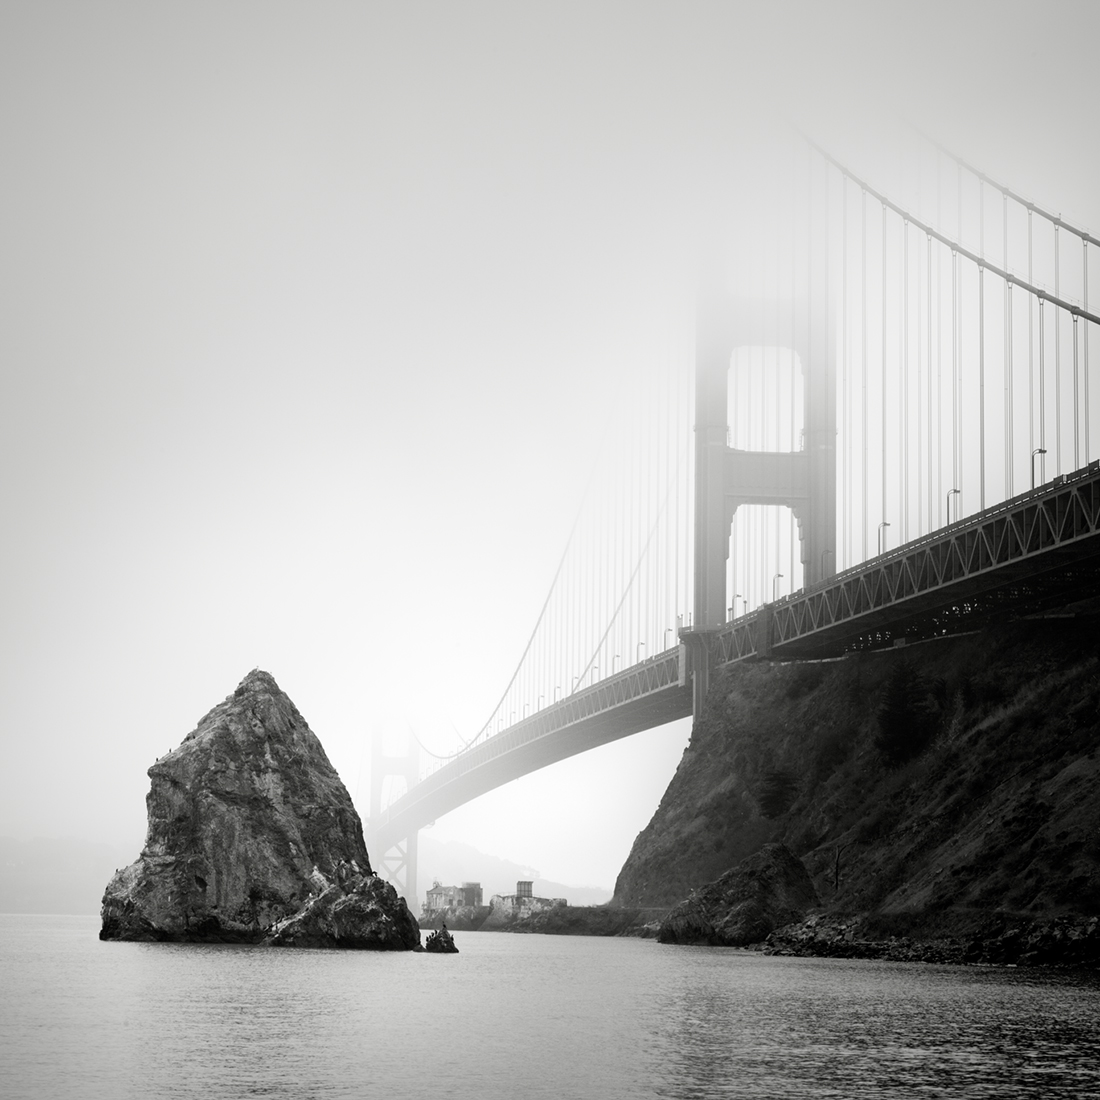 75 Views The Golden Gate Bridge